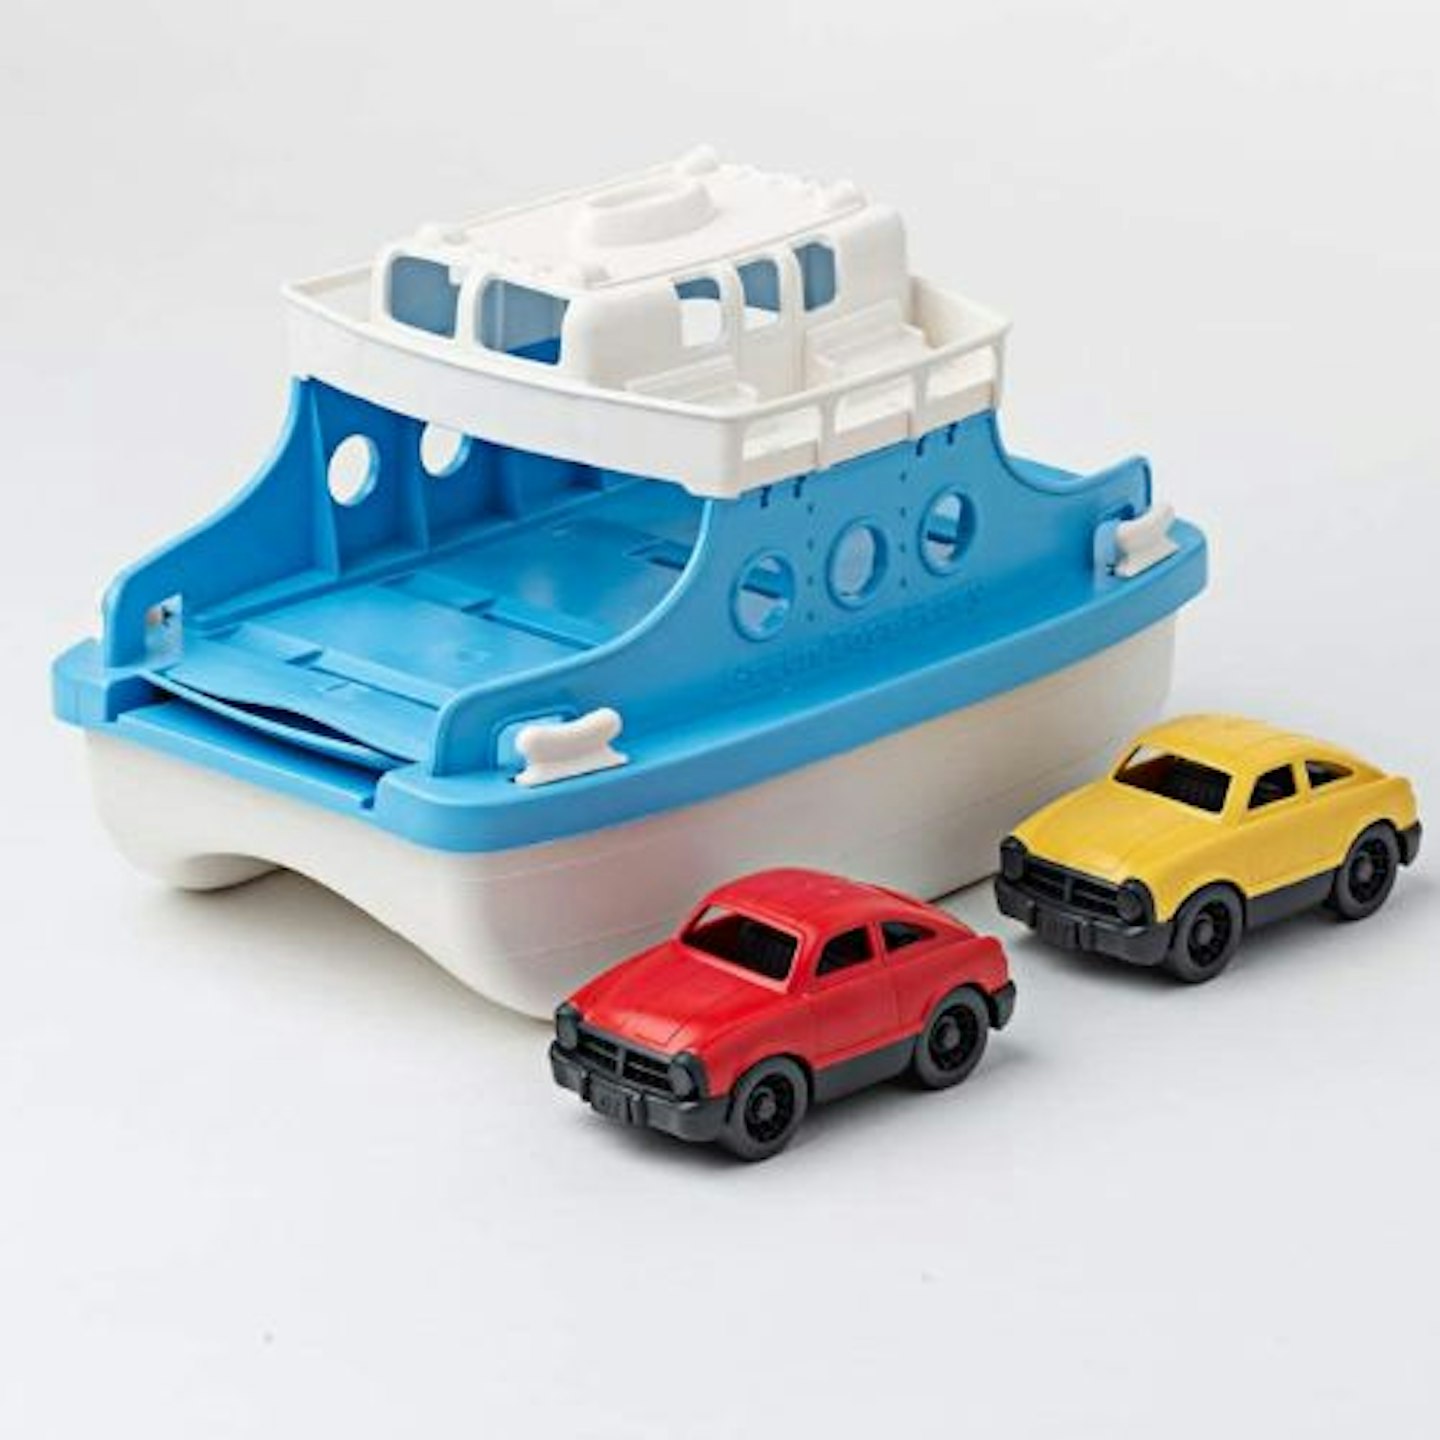  Green Toys Ferry Boat with Mini Cars Bathtub Toy